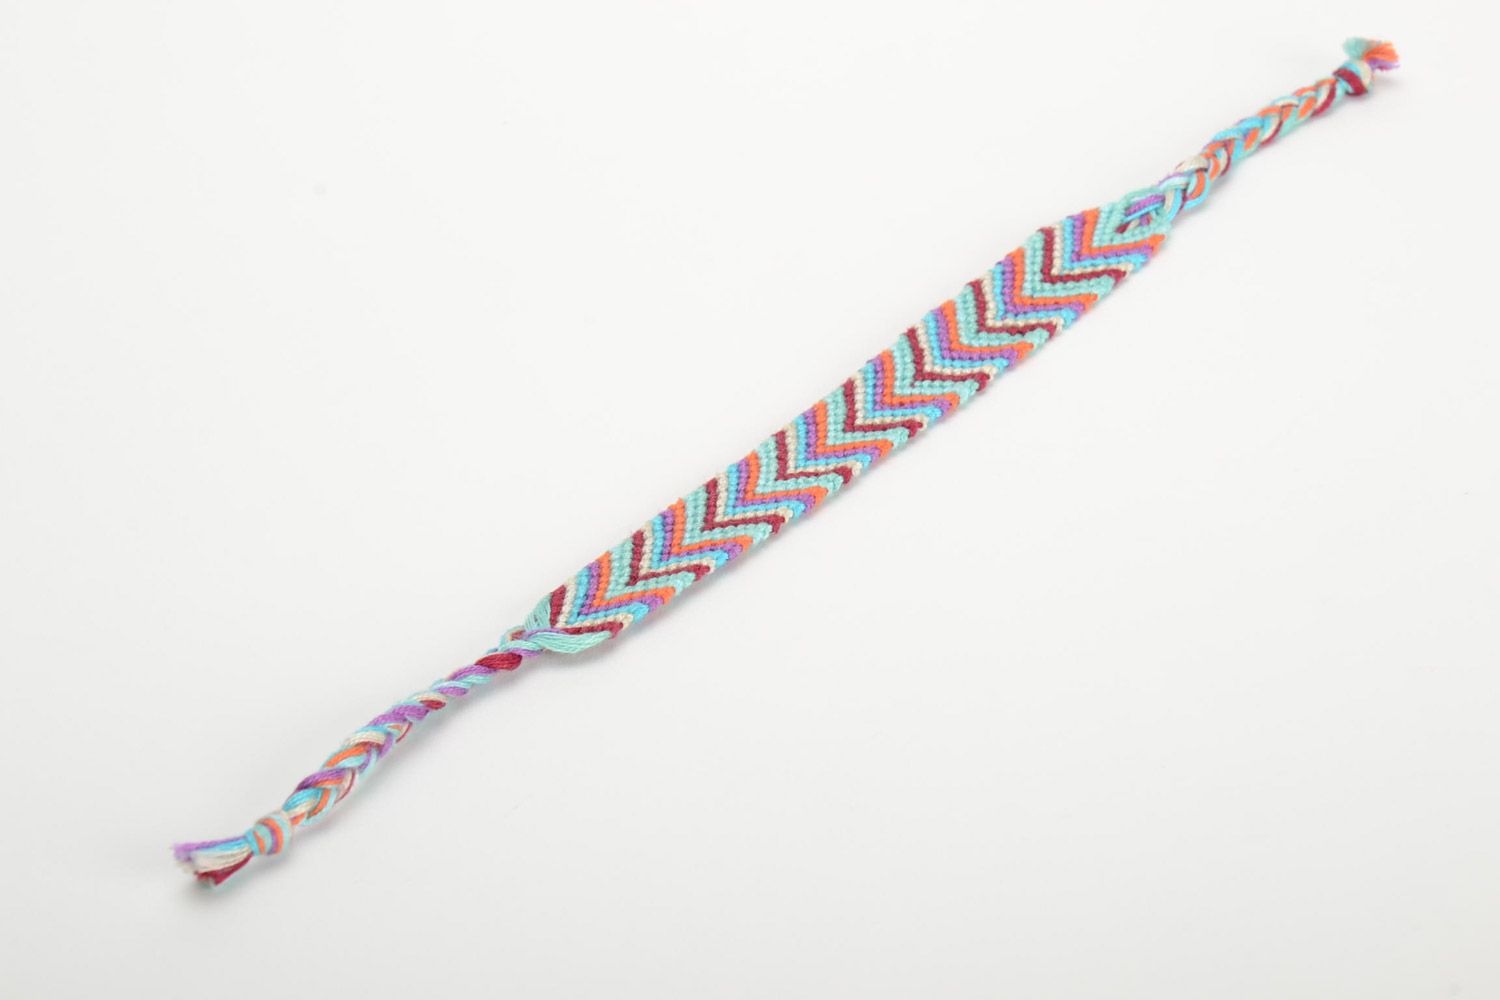 Handmade stylish friendship wrist bracelet woven of colorful embroidery floss photo 2